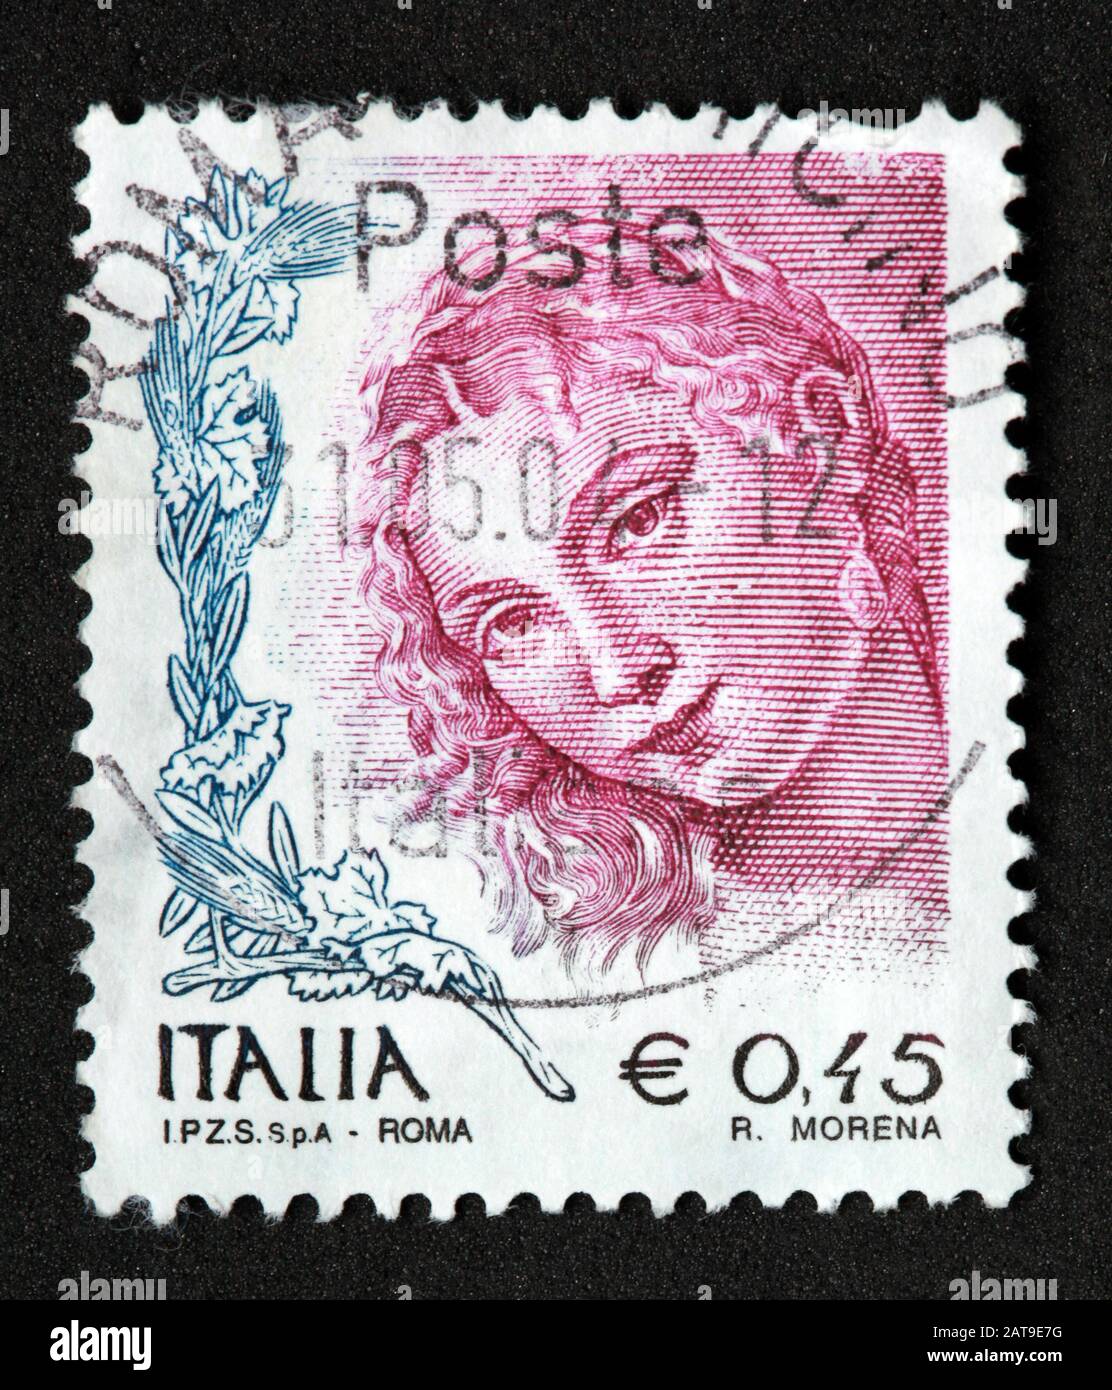 Timbre italien, poste Italia utilisé et franked Stamp, Italia E0.45 Roma R.morena Banque D'Images